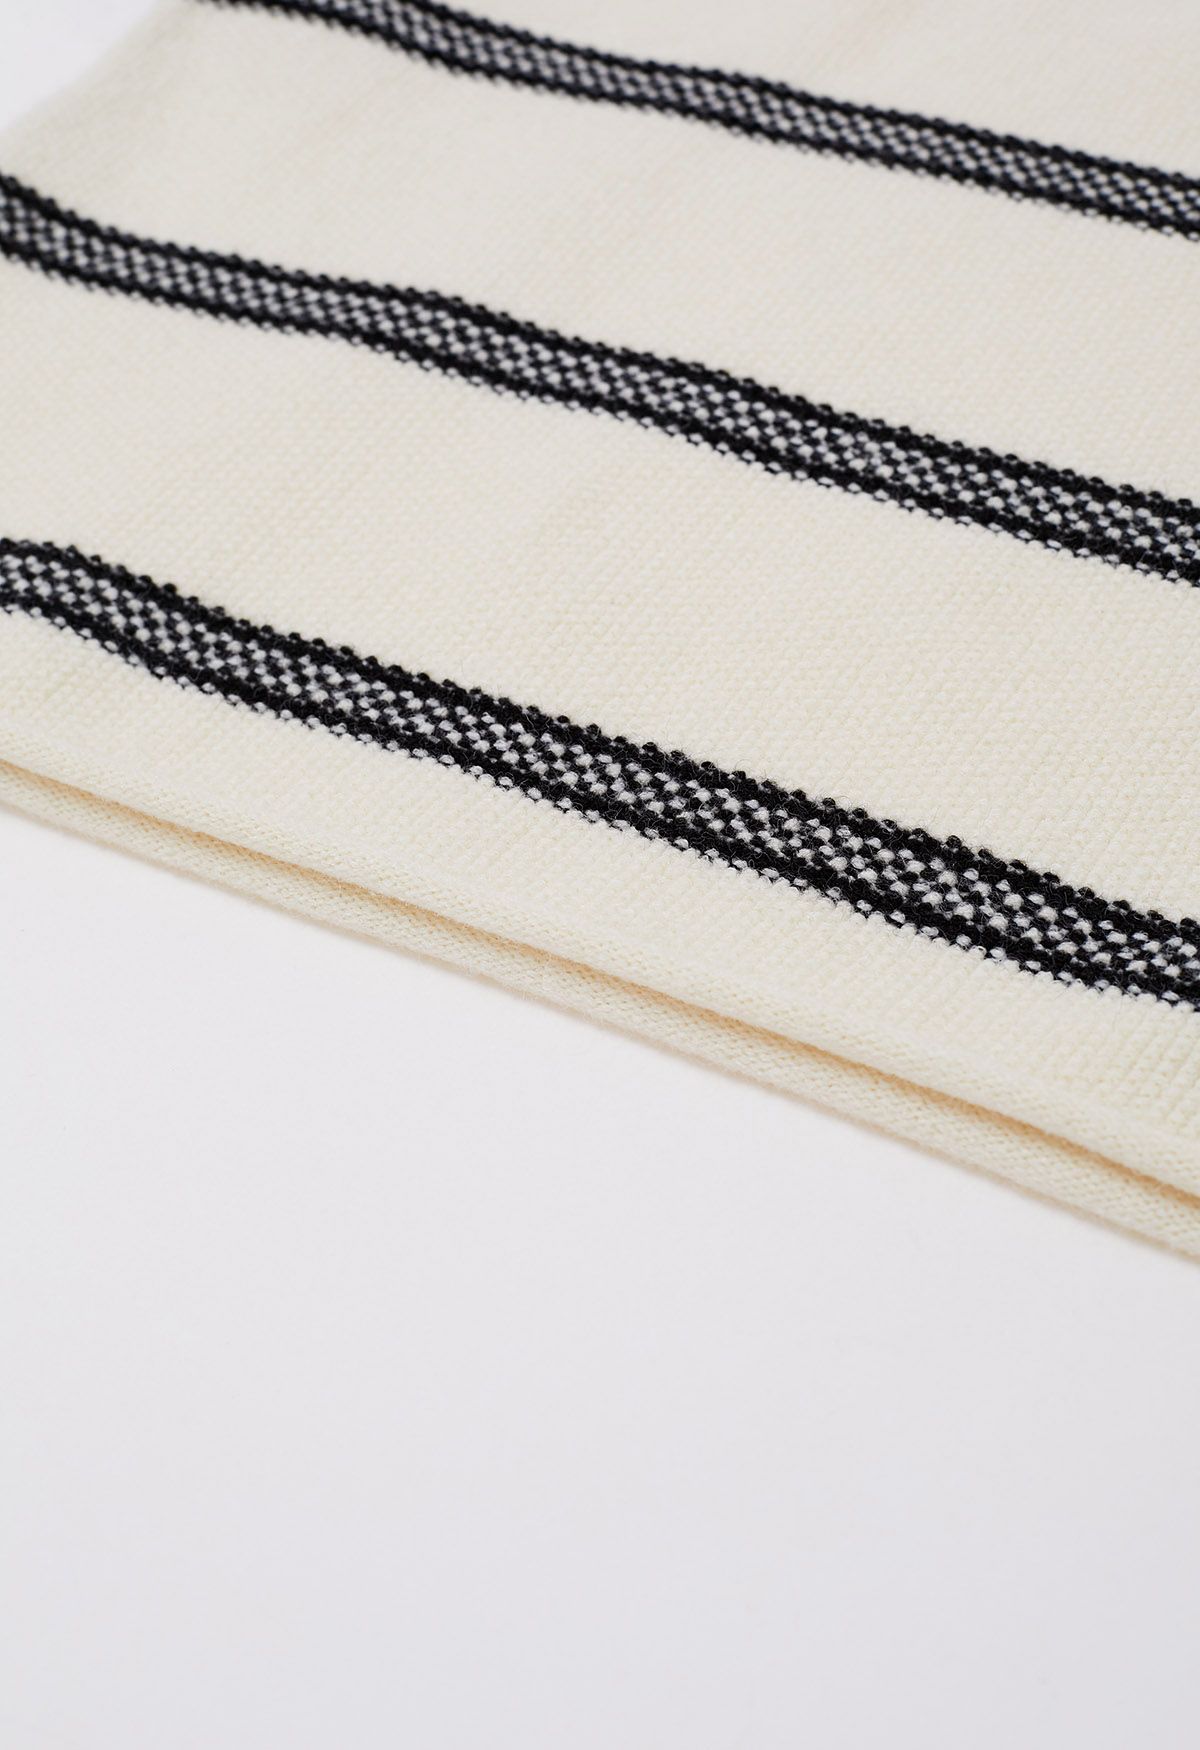 Denim Sleeve Spliced Striped Knit Sweater in Cream